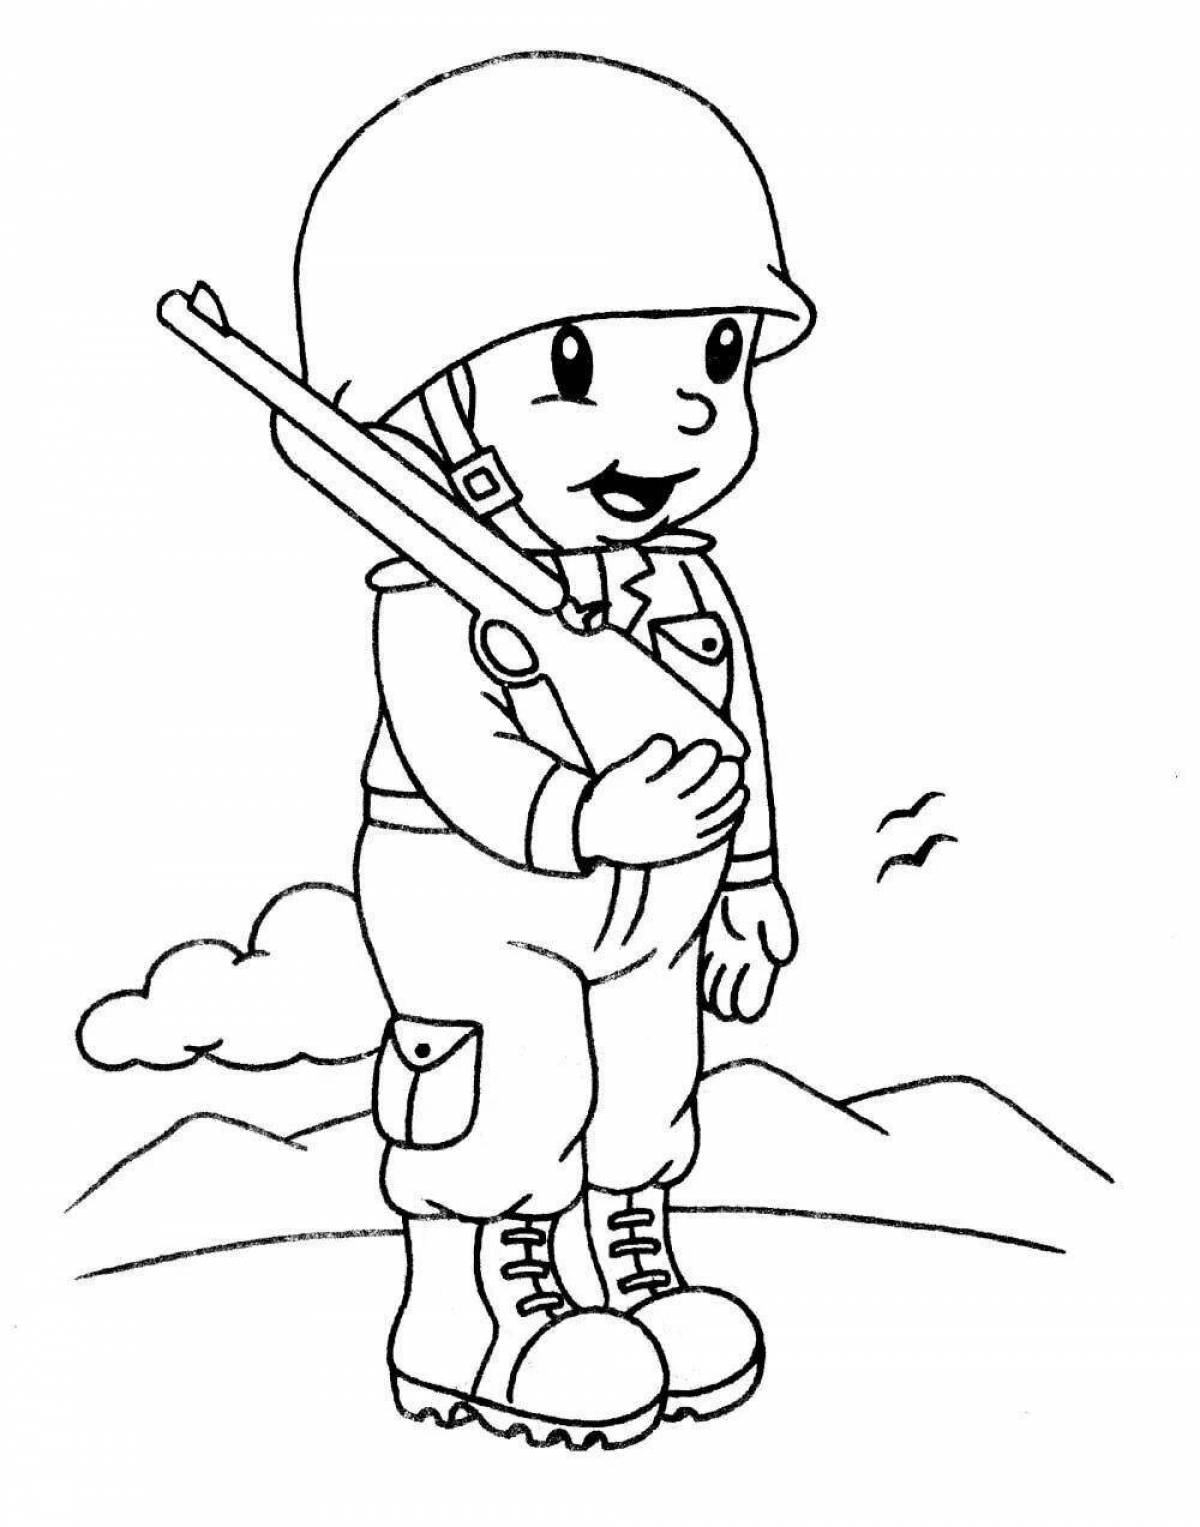 Незабываемая раскраска солдат детская